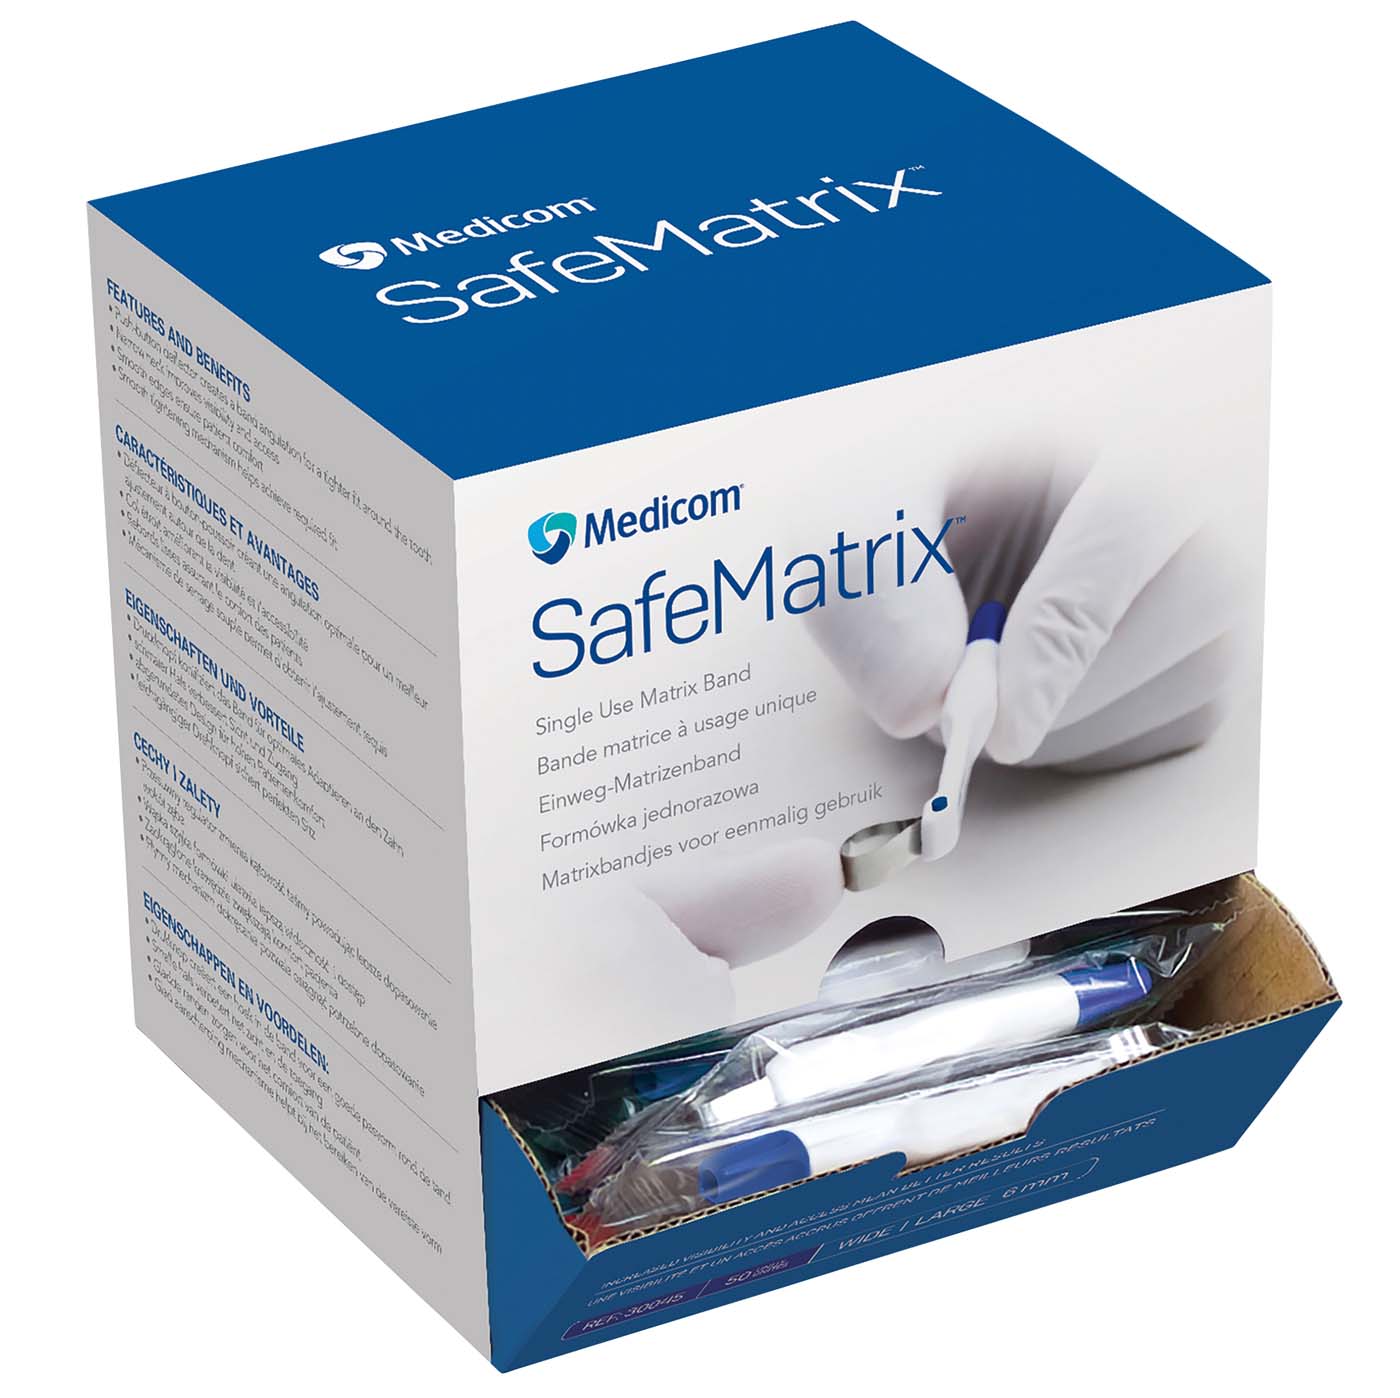 Medicom® SafeMatrix™ Packung 50 Stück blau, groß